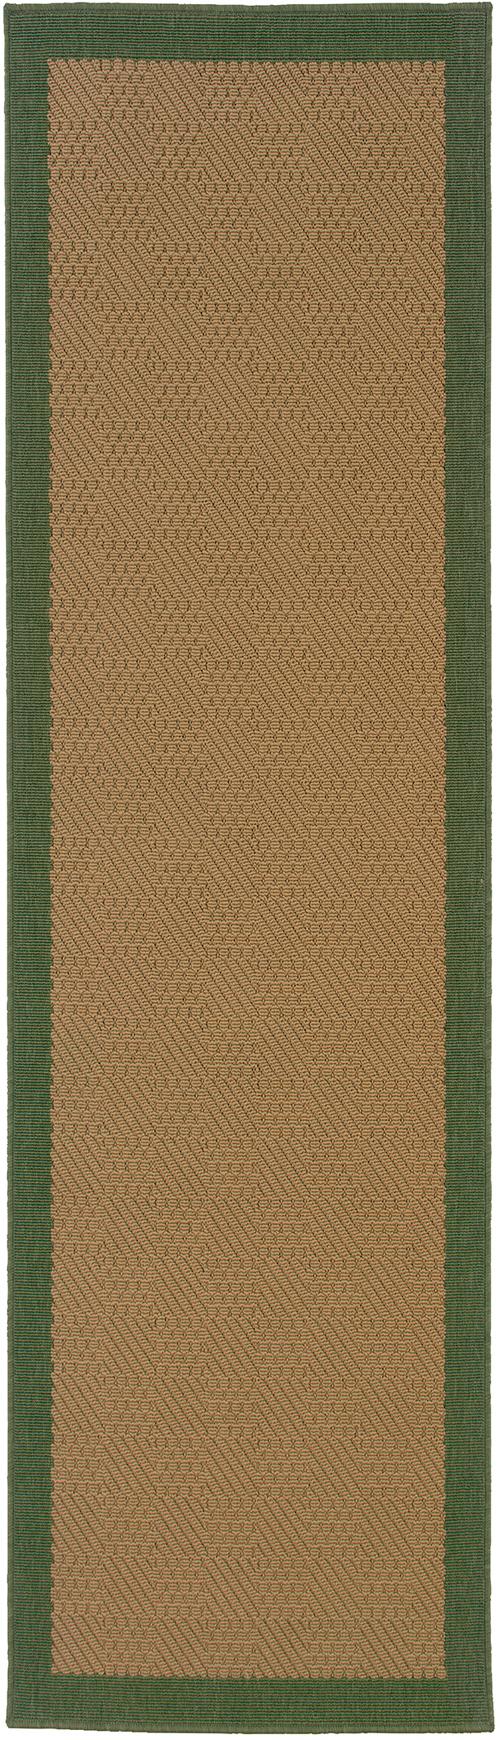 oriental weavers lanai 525g6 beige